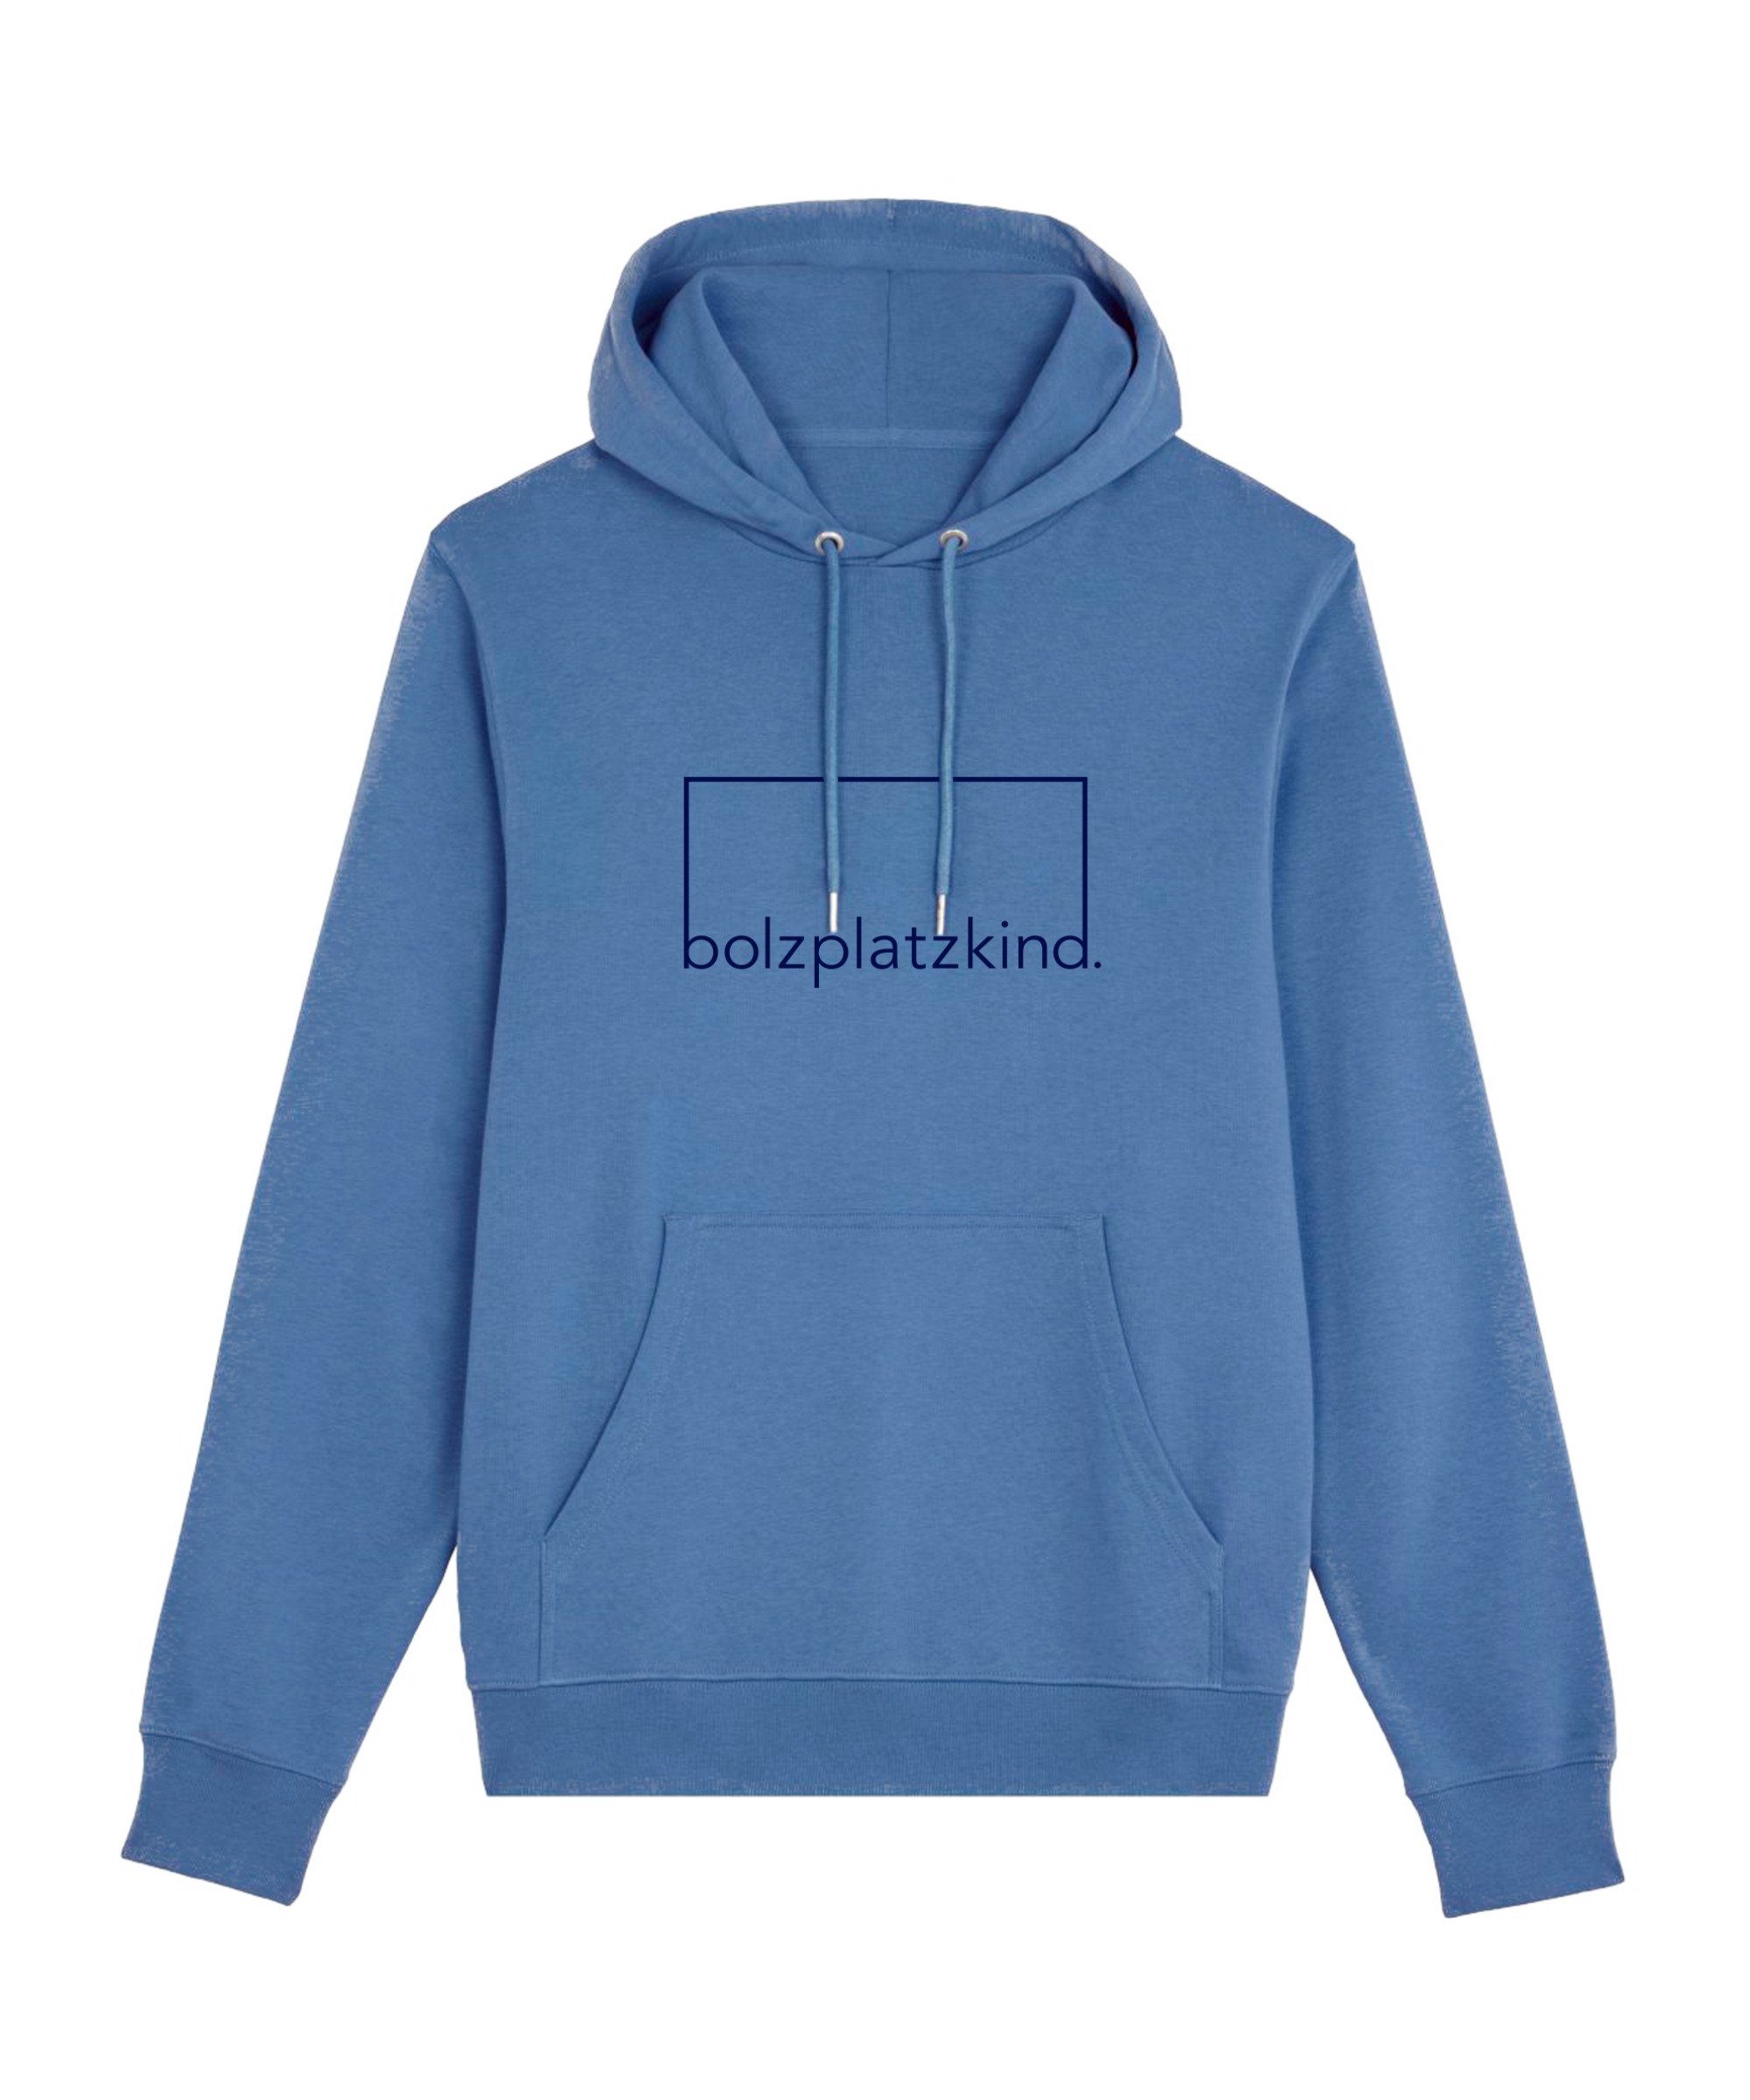 Hoody Sweatshirt "Selbstliebe" blau Bolzplatzkind